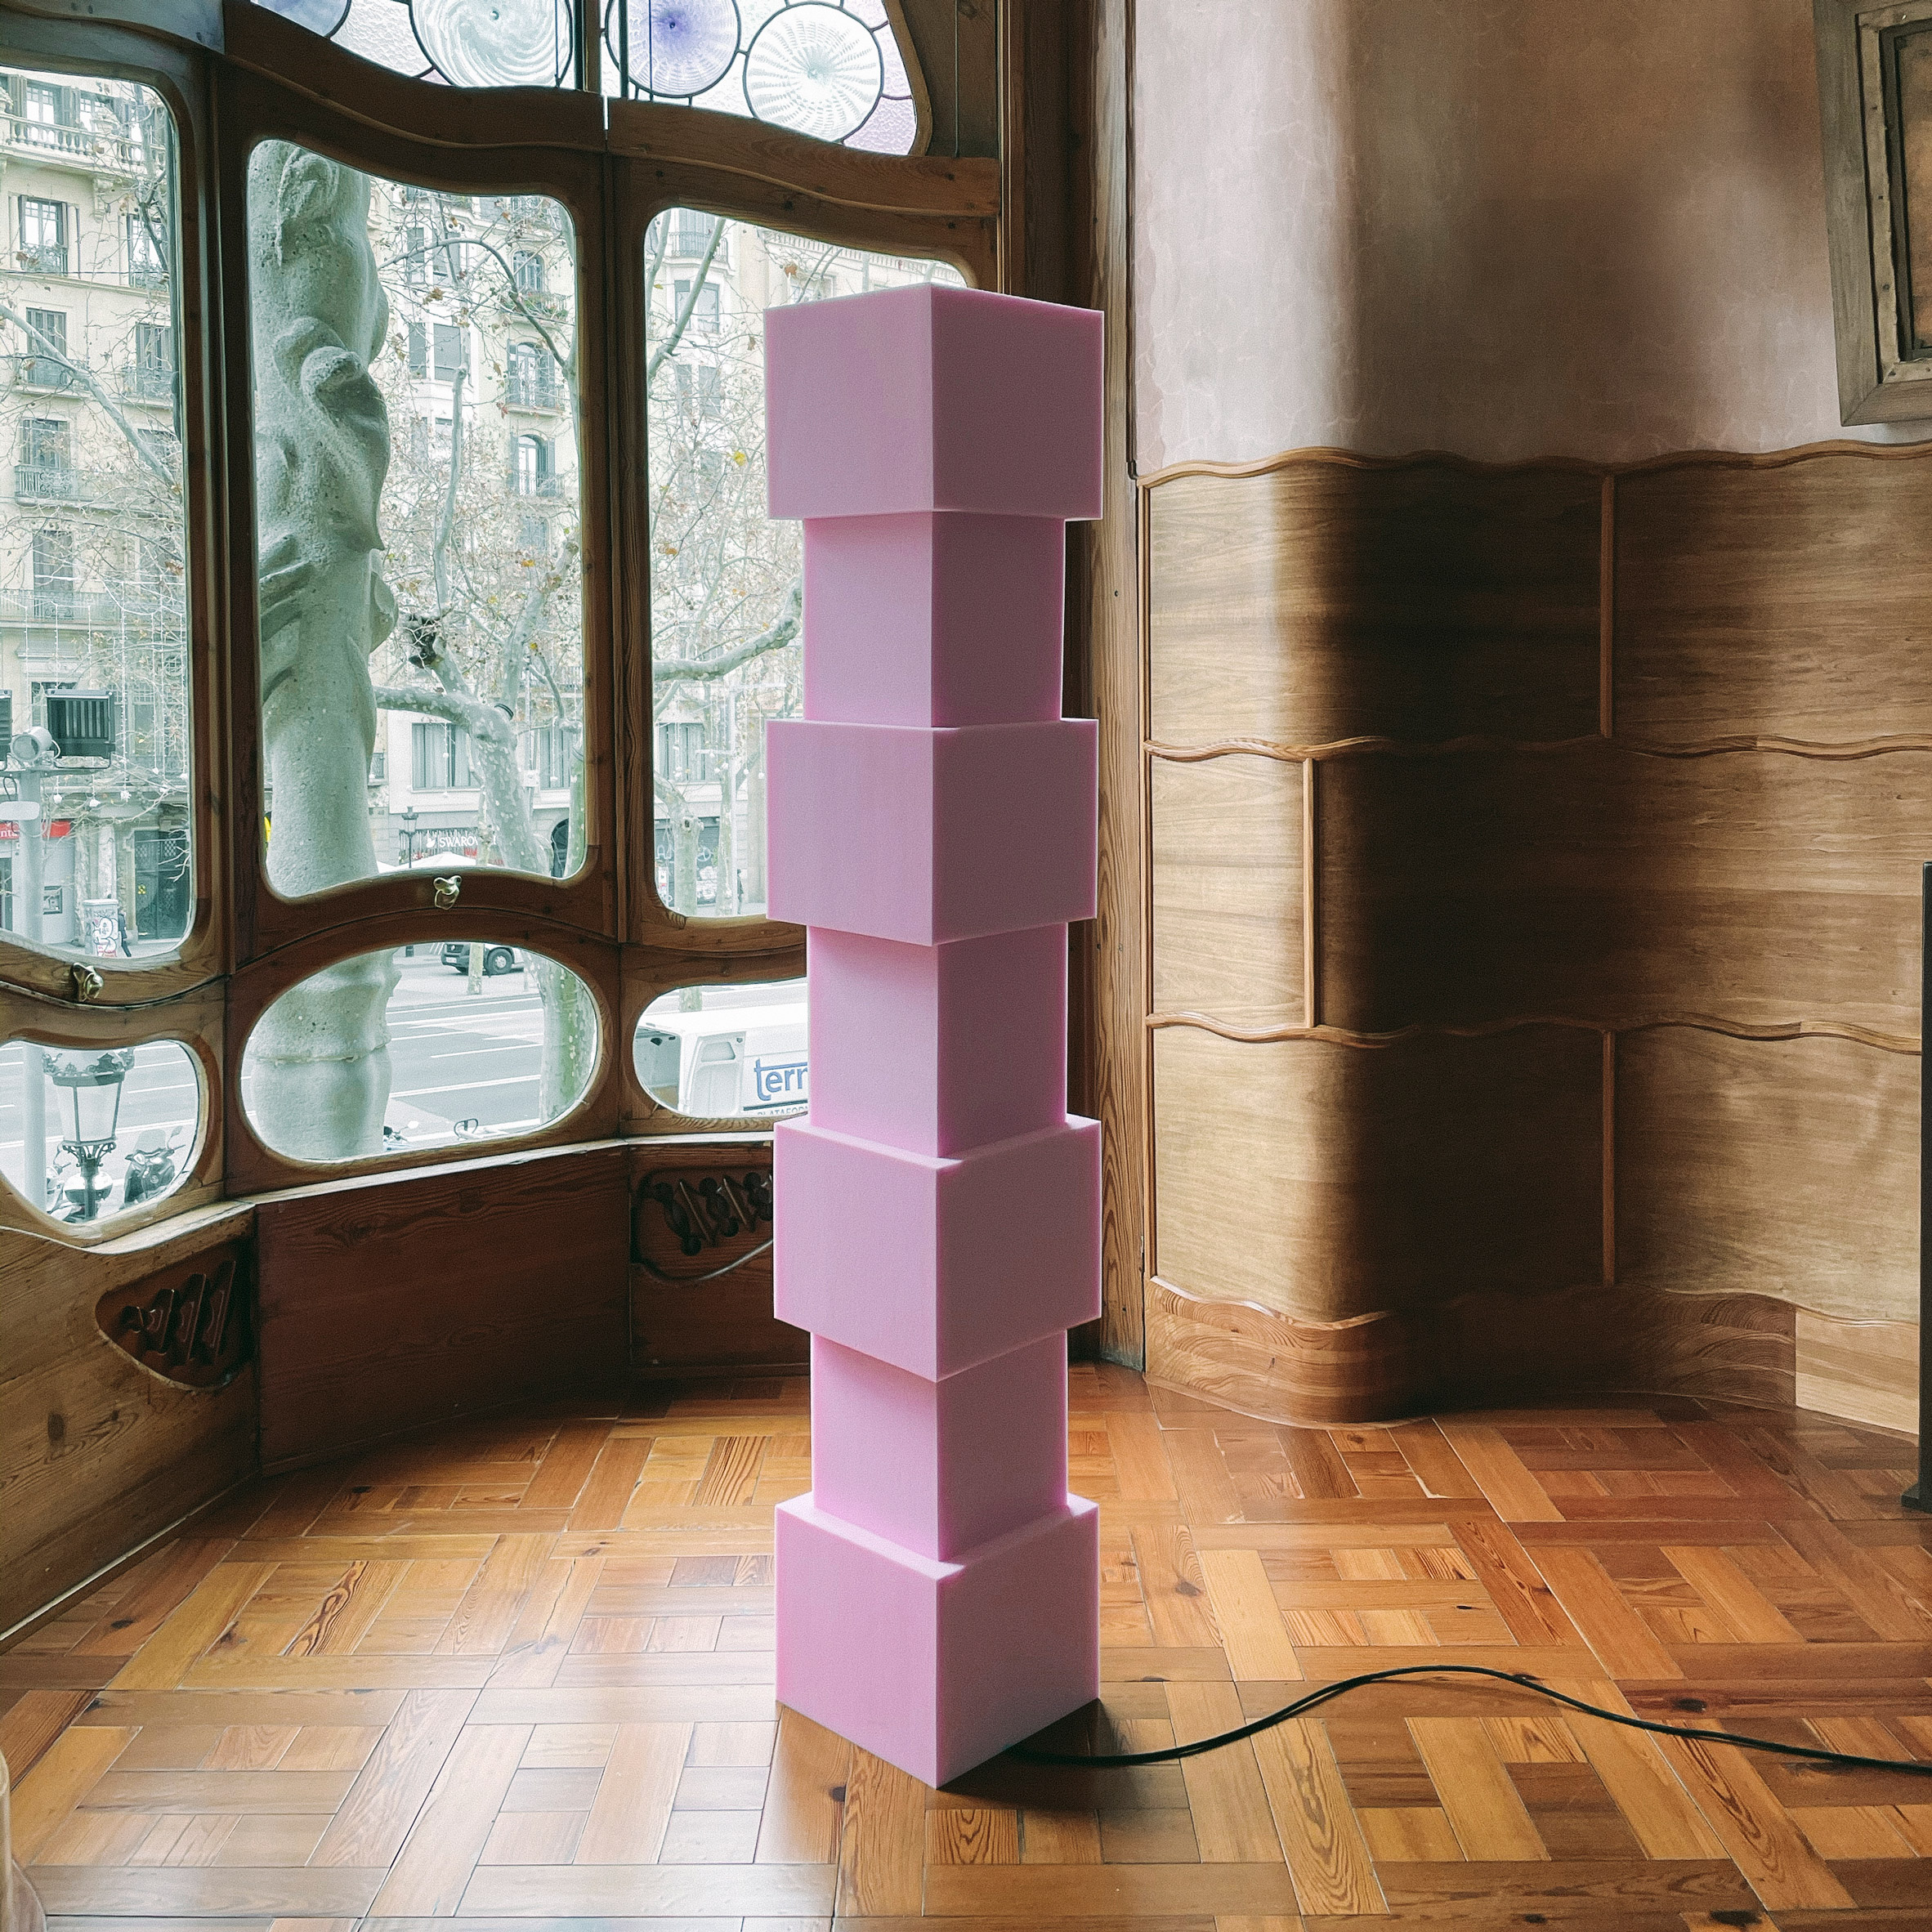 Max Enrich Sculpts Lamps From Upholstery Foam For Gaudis Casa Batlló 1064